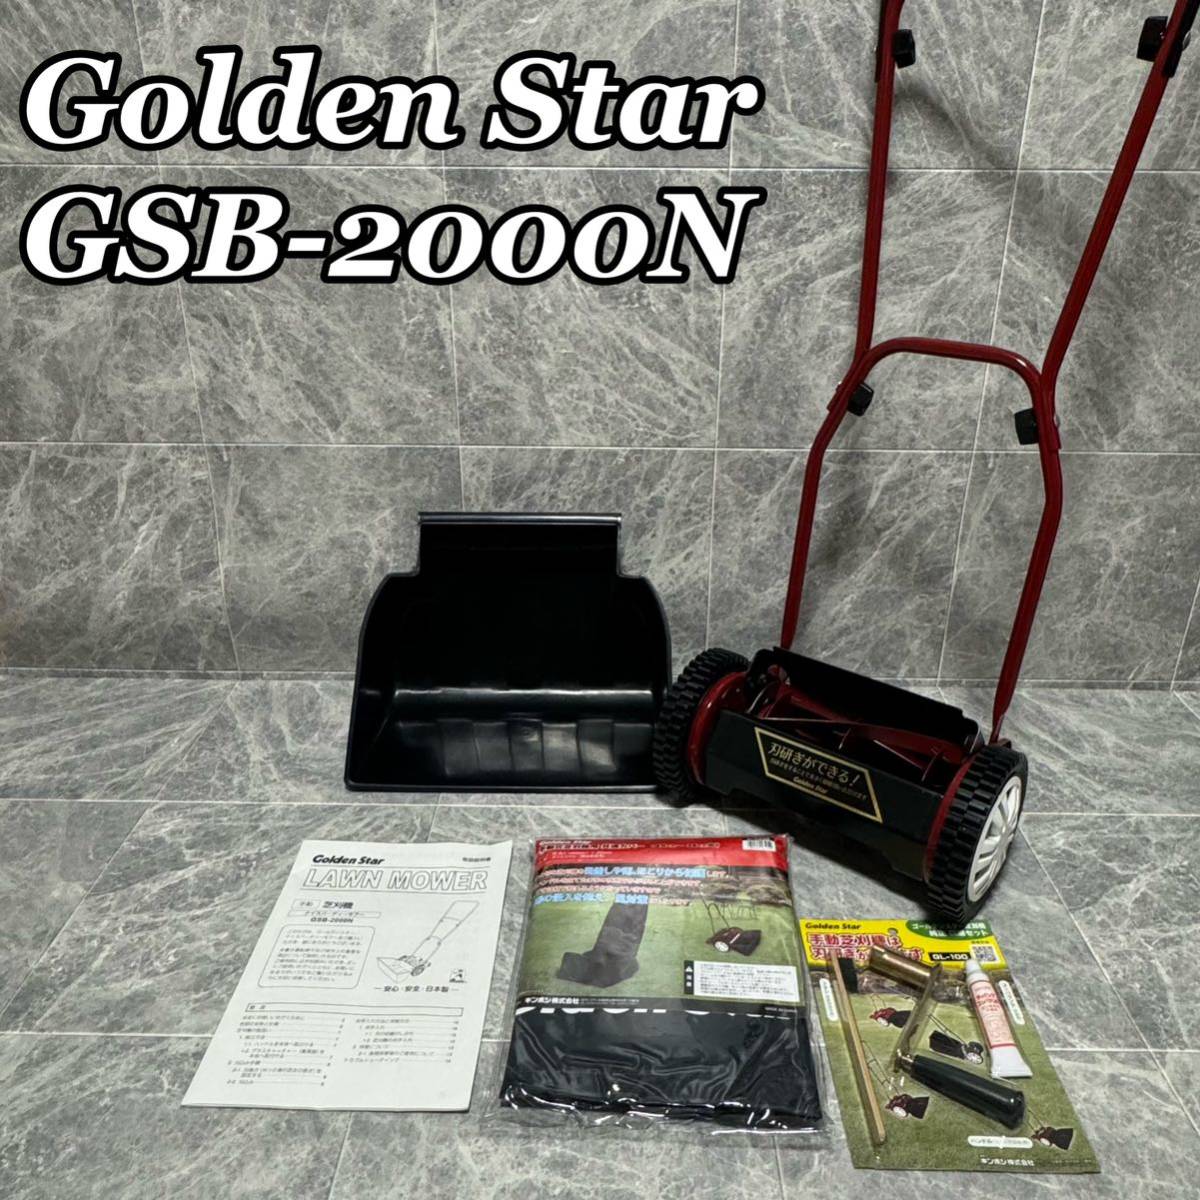 Golden Star ゴールデンスター キンボシ kinboshi ナイスバーディーモアー GSB-2000N 芝刈り機 手動